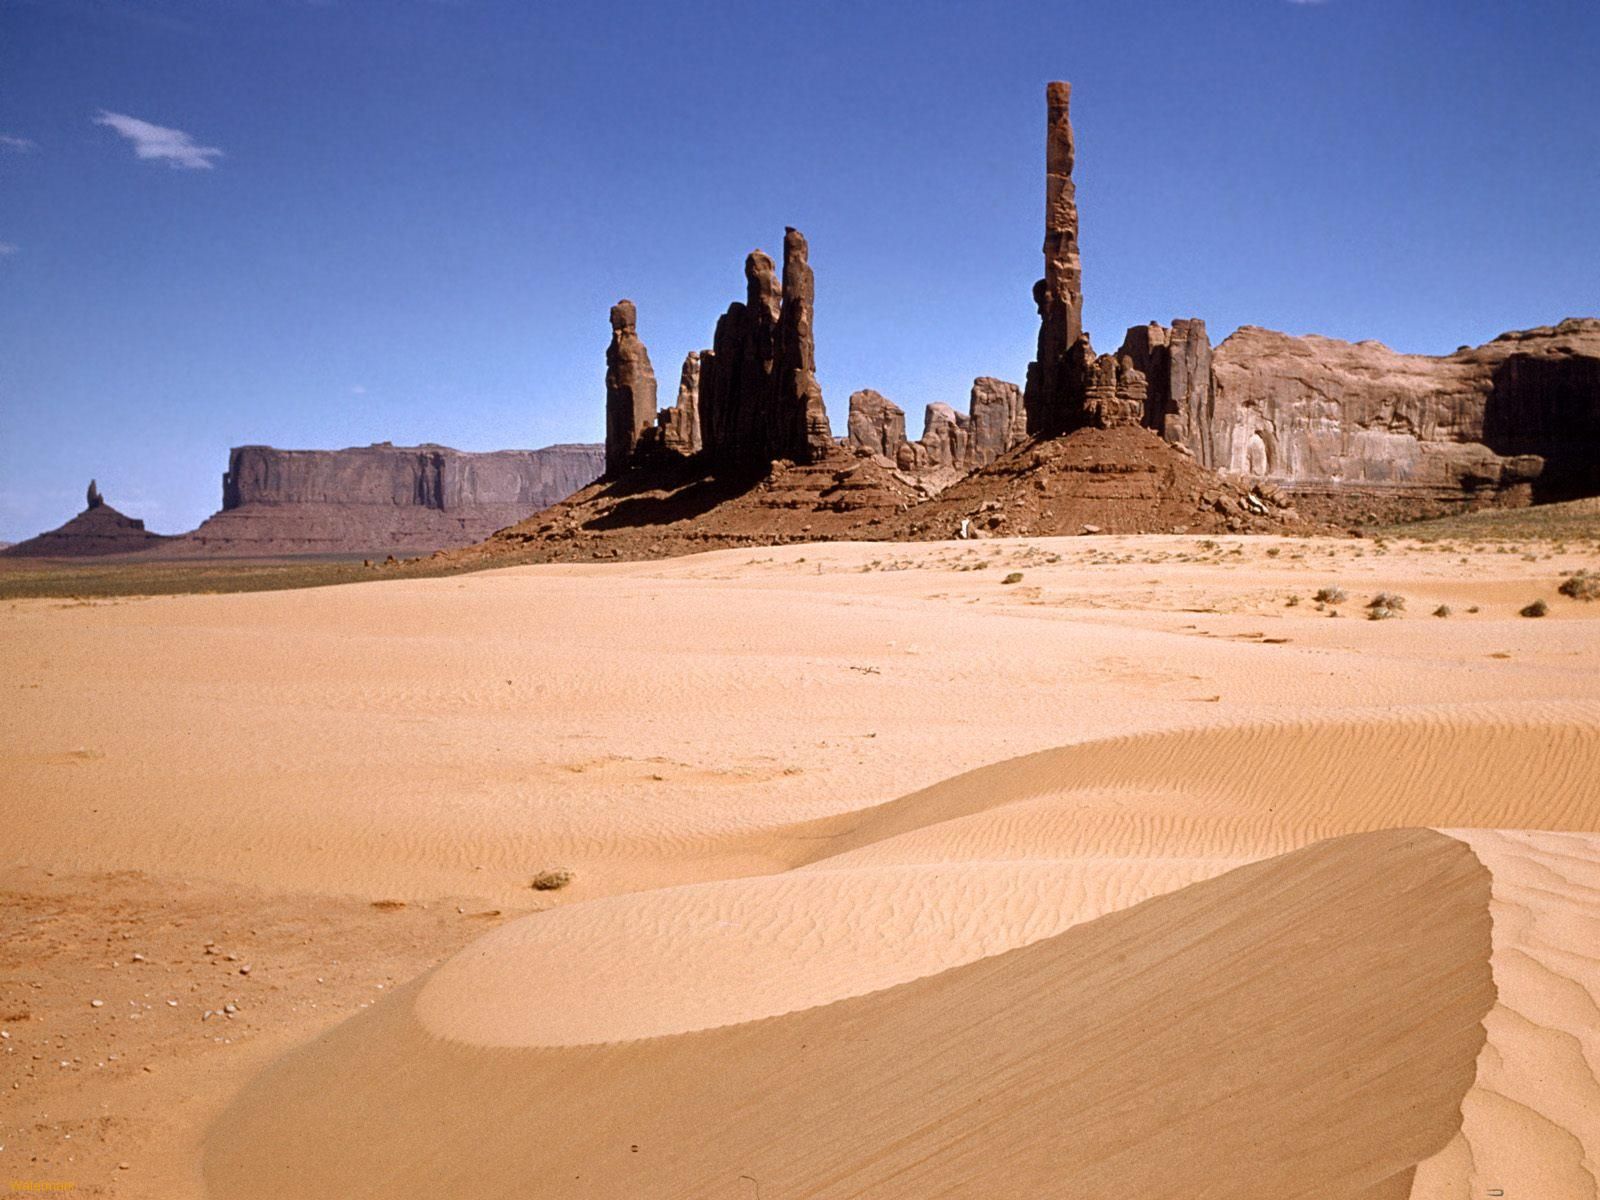 Hd Desert Wallpaper Sahara Desert Image Download